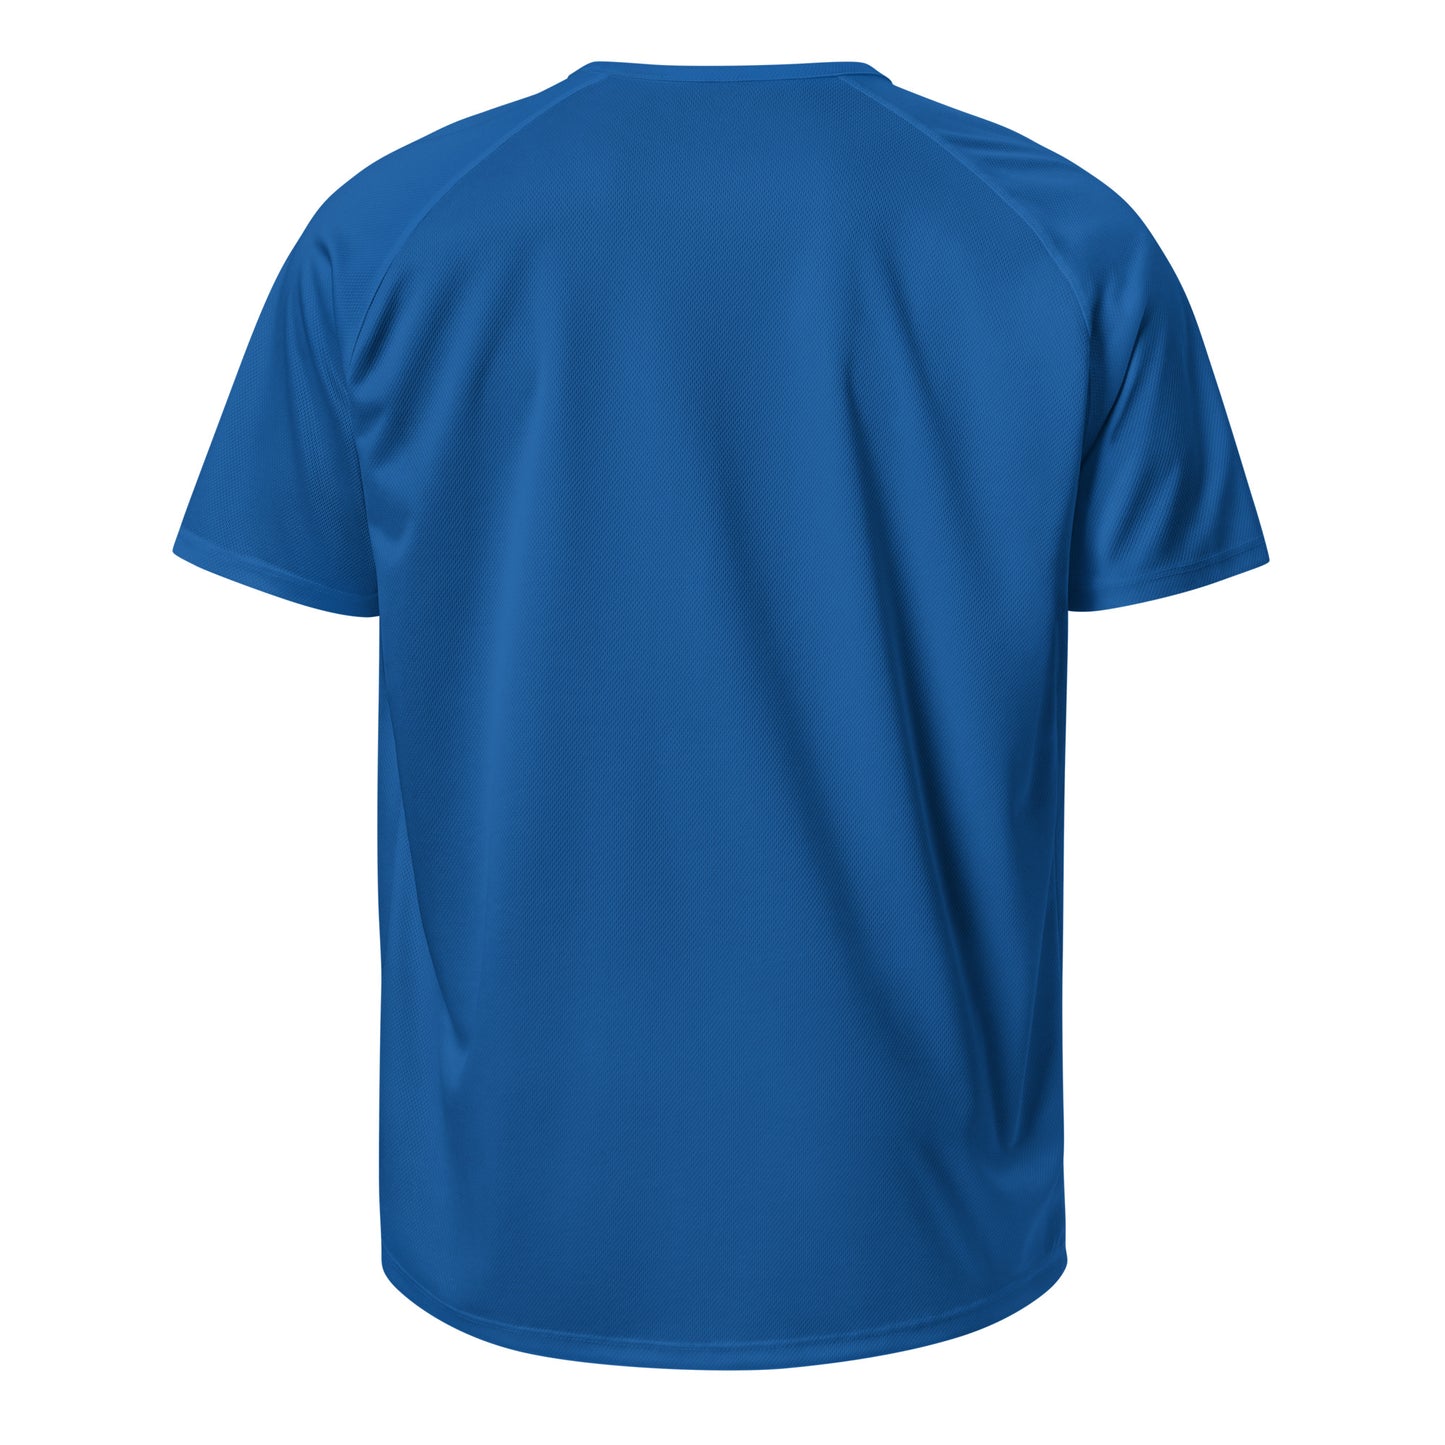 E123 - Sports/Breathable Fabric (Universal jump/woman : Blue)